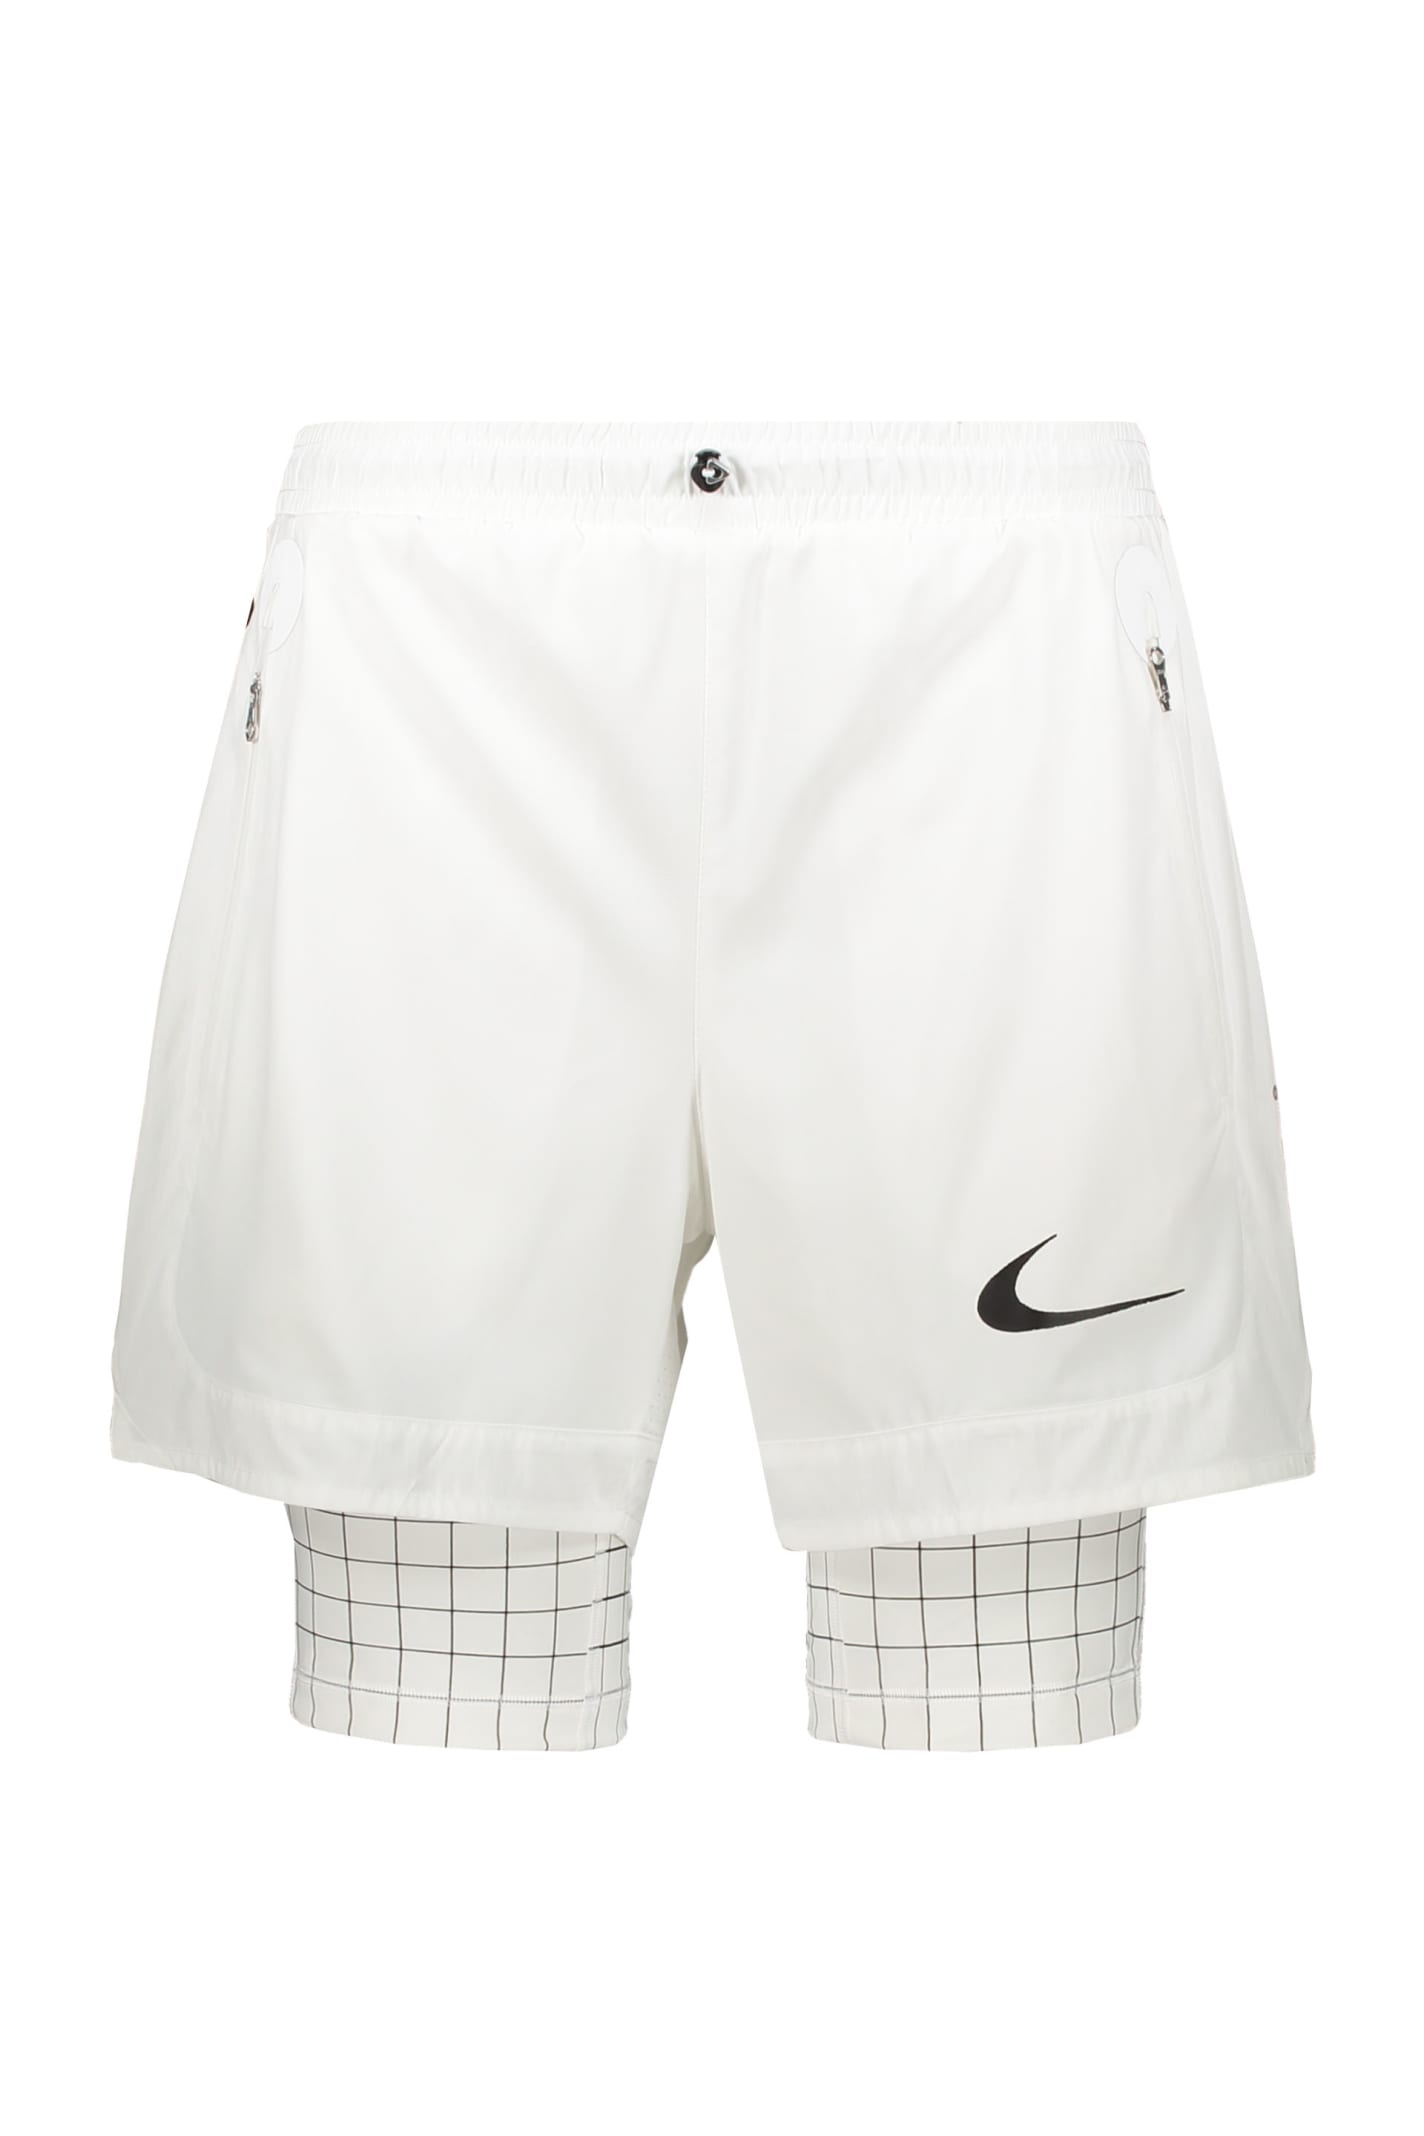 Nike X Off White Nylon Bermuda Shorts